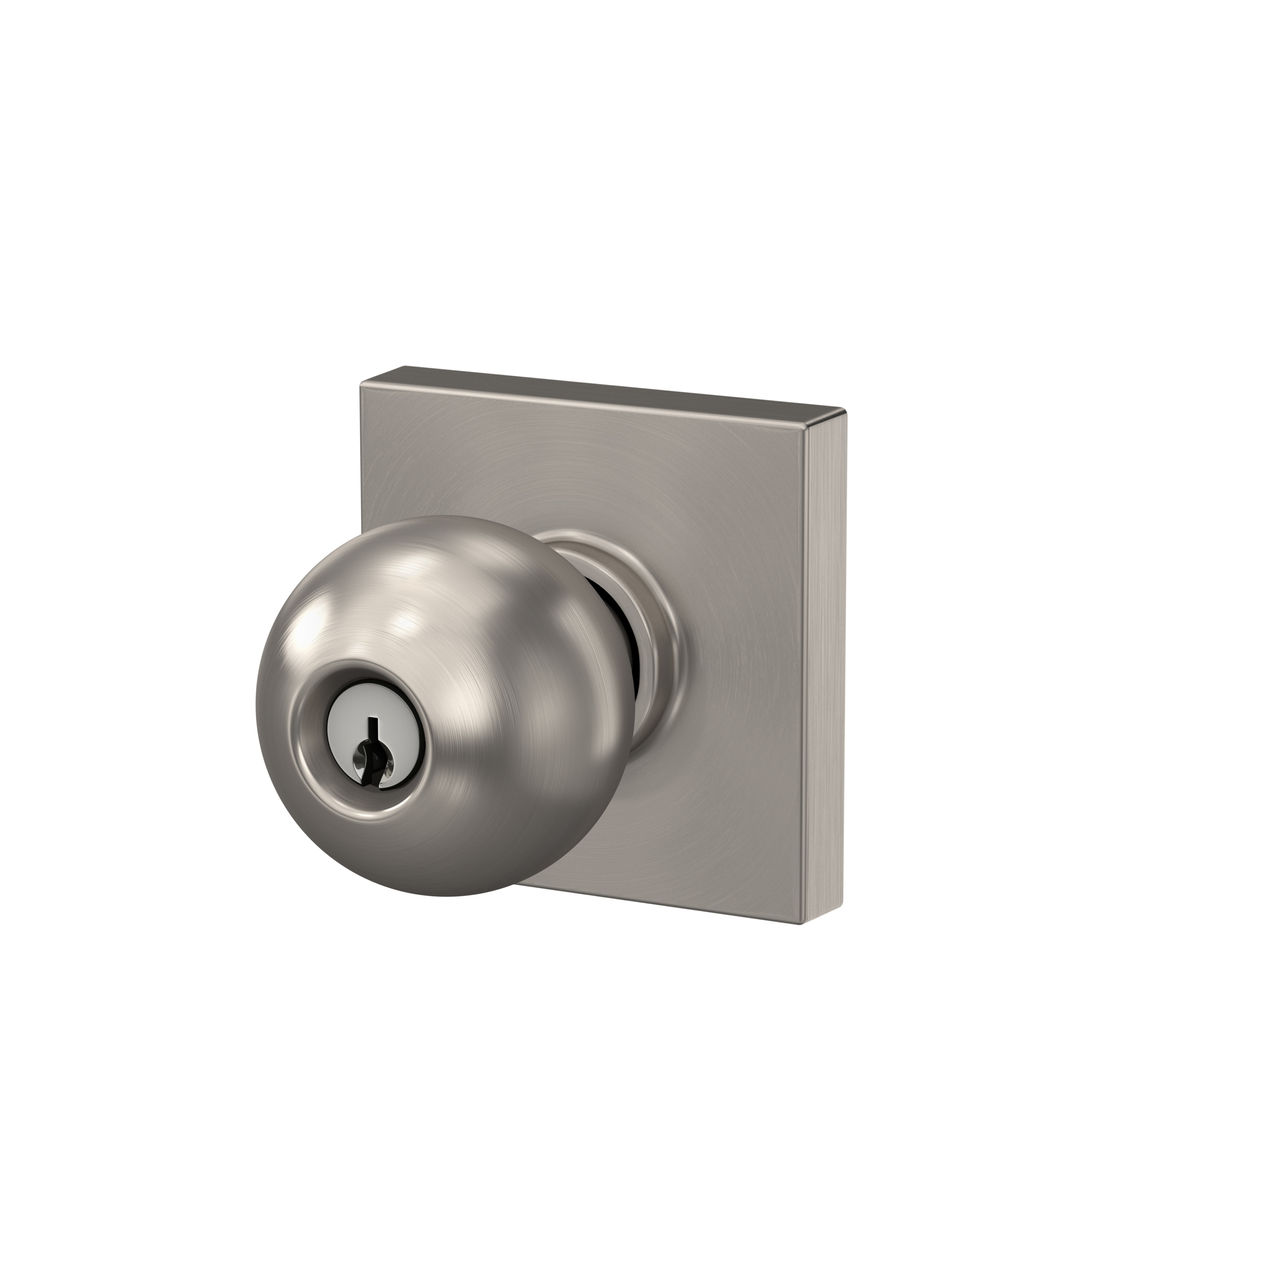 Orbit Knob Keyed Entry lock